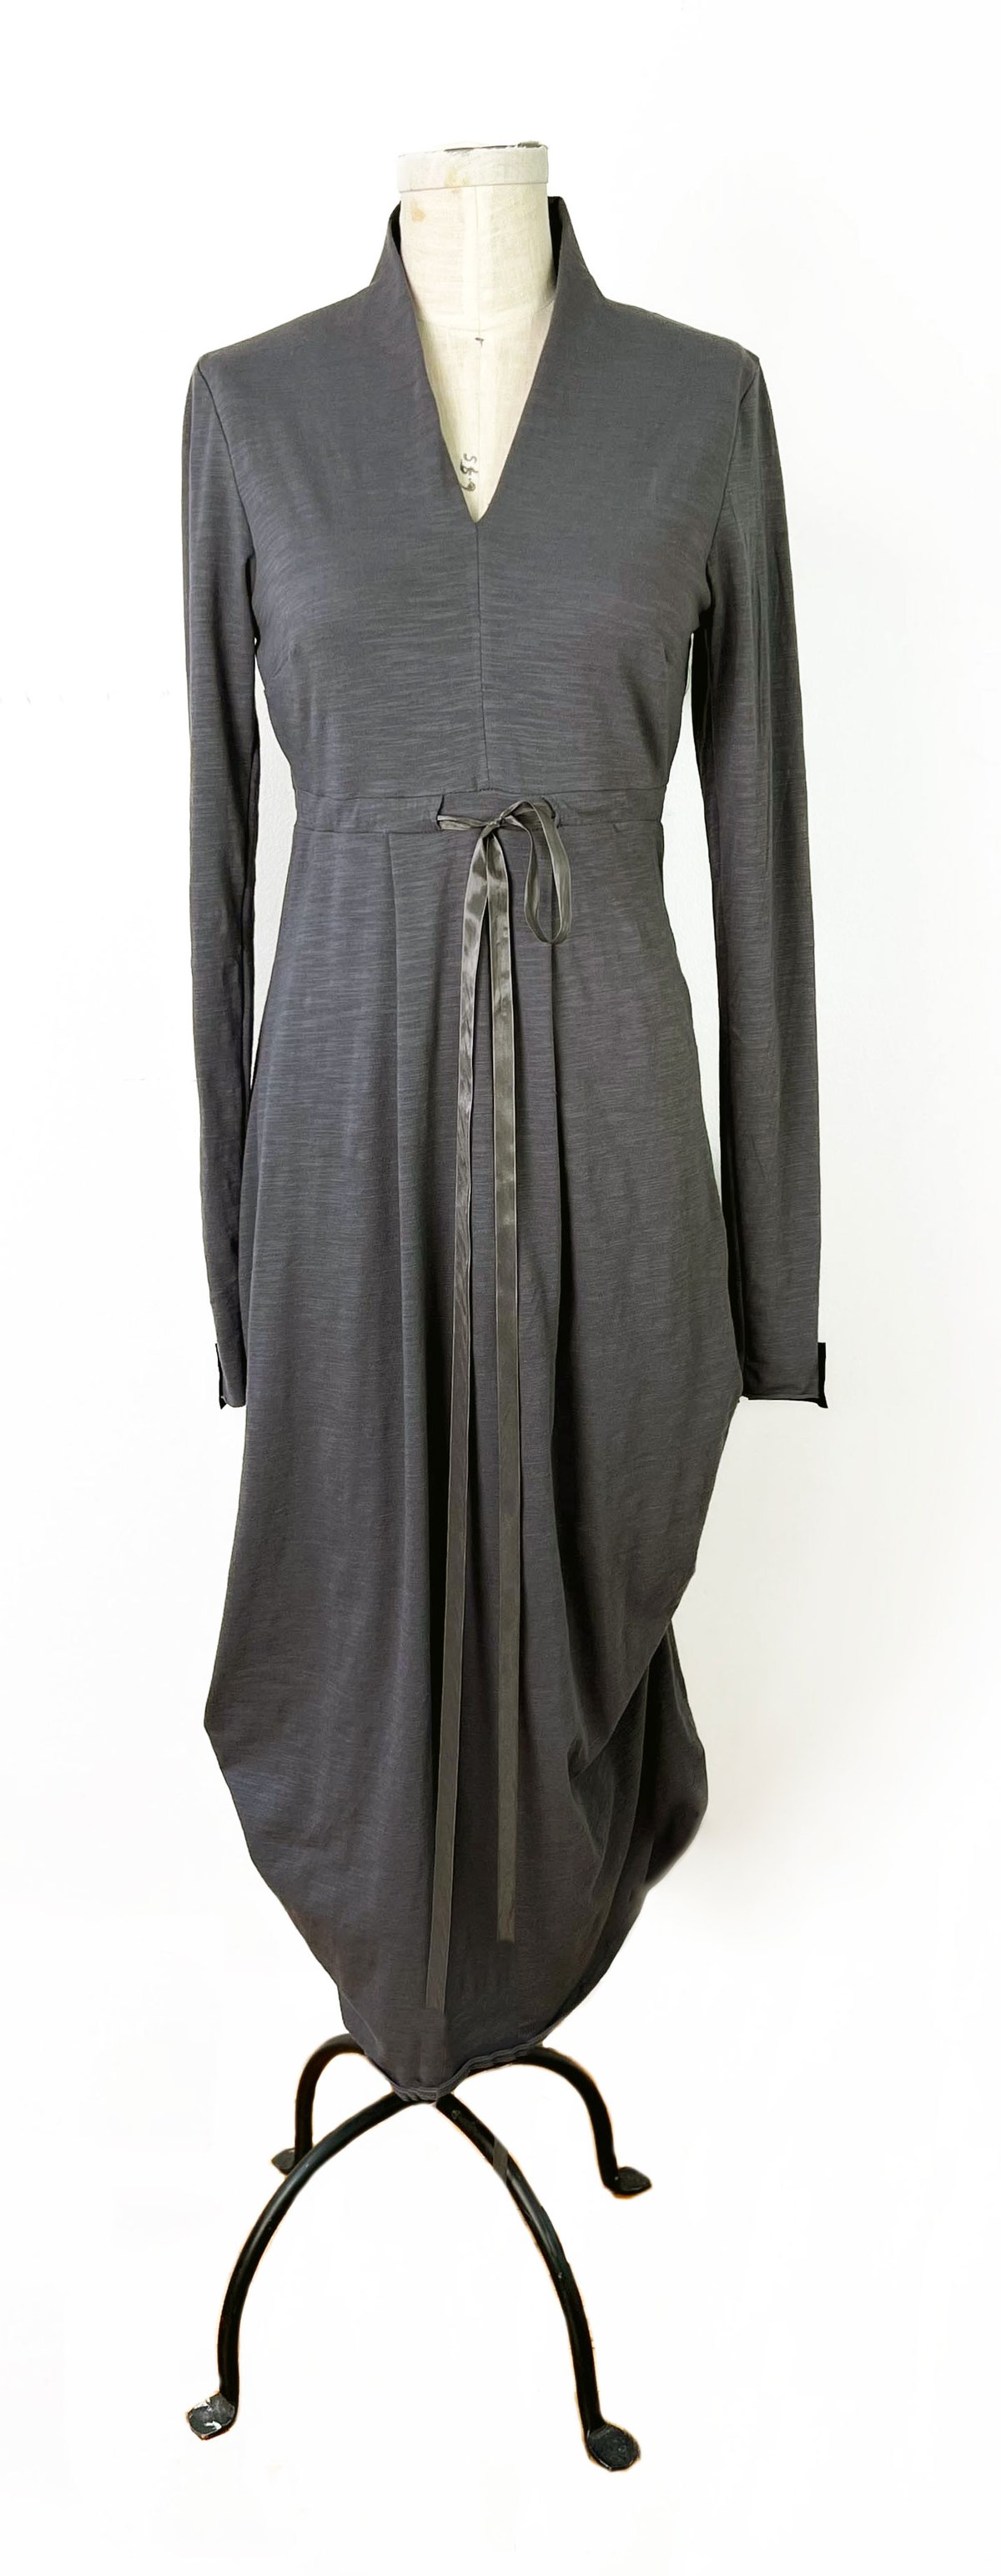 Image of Vista Dress in Gray